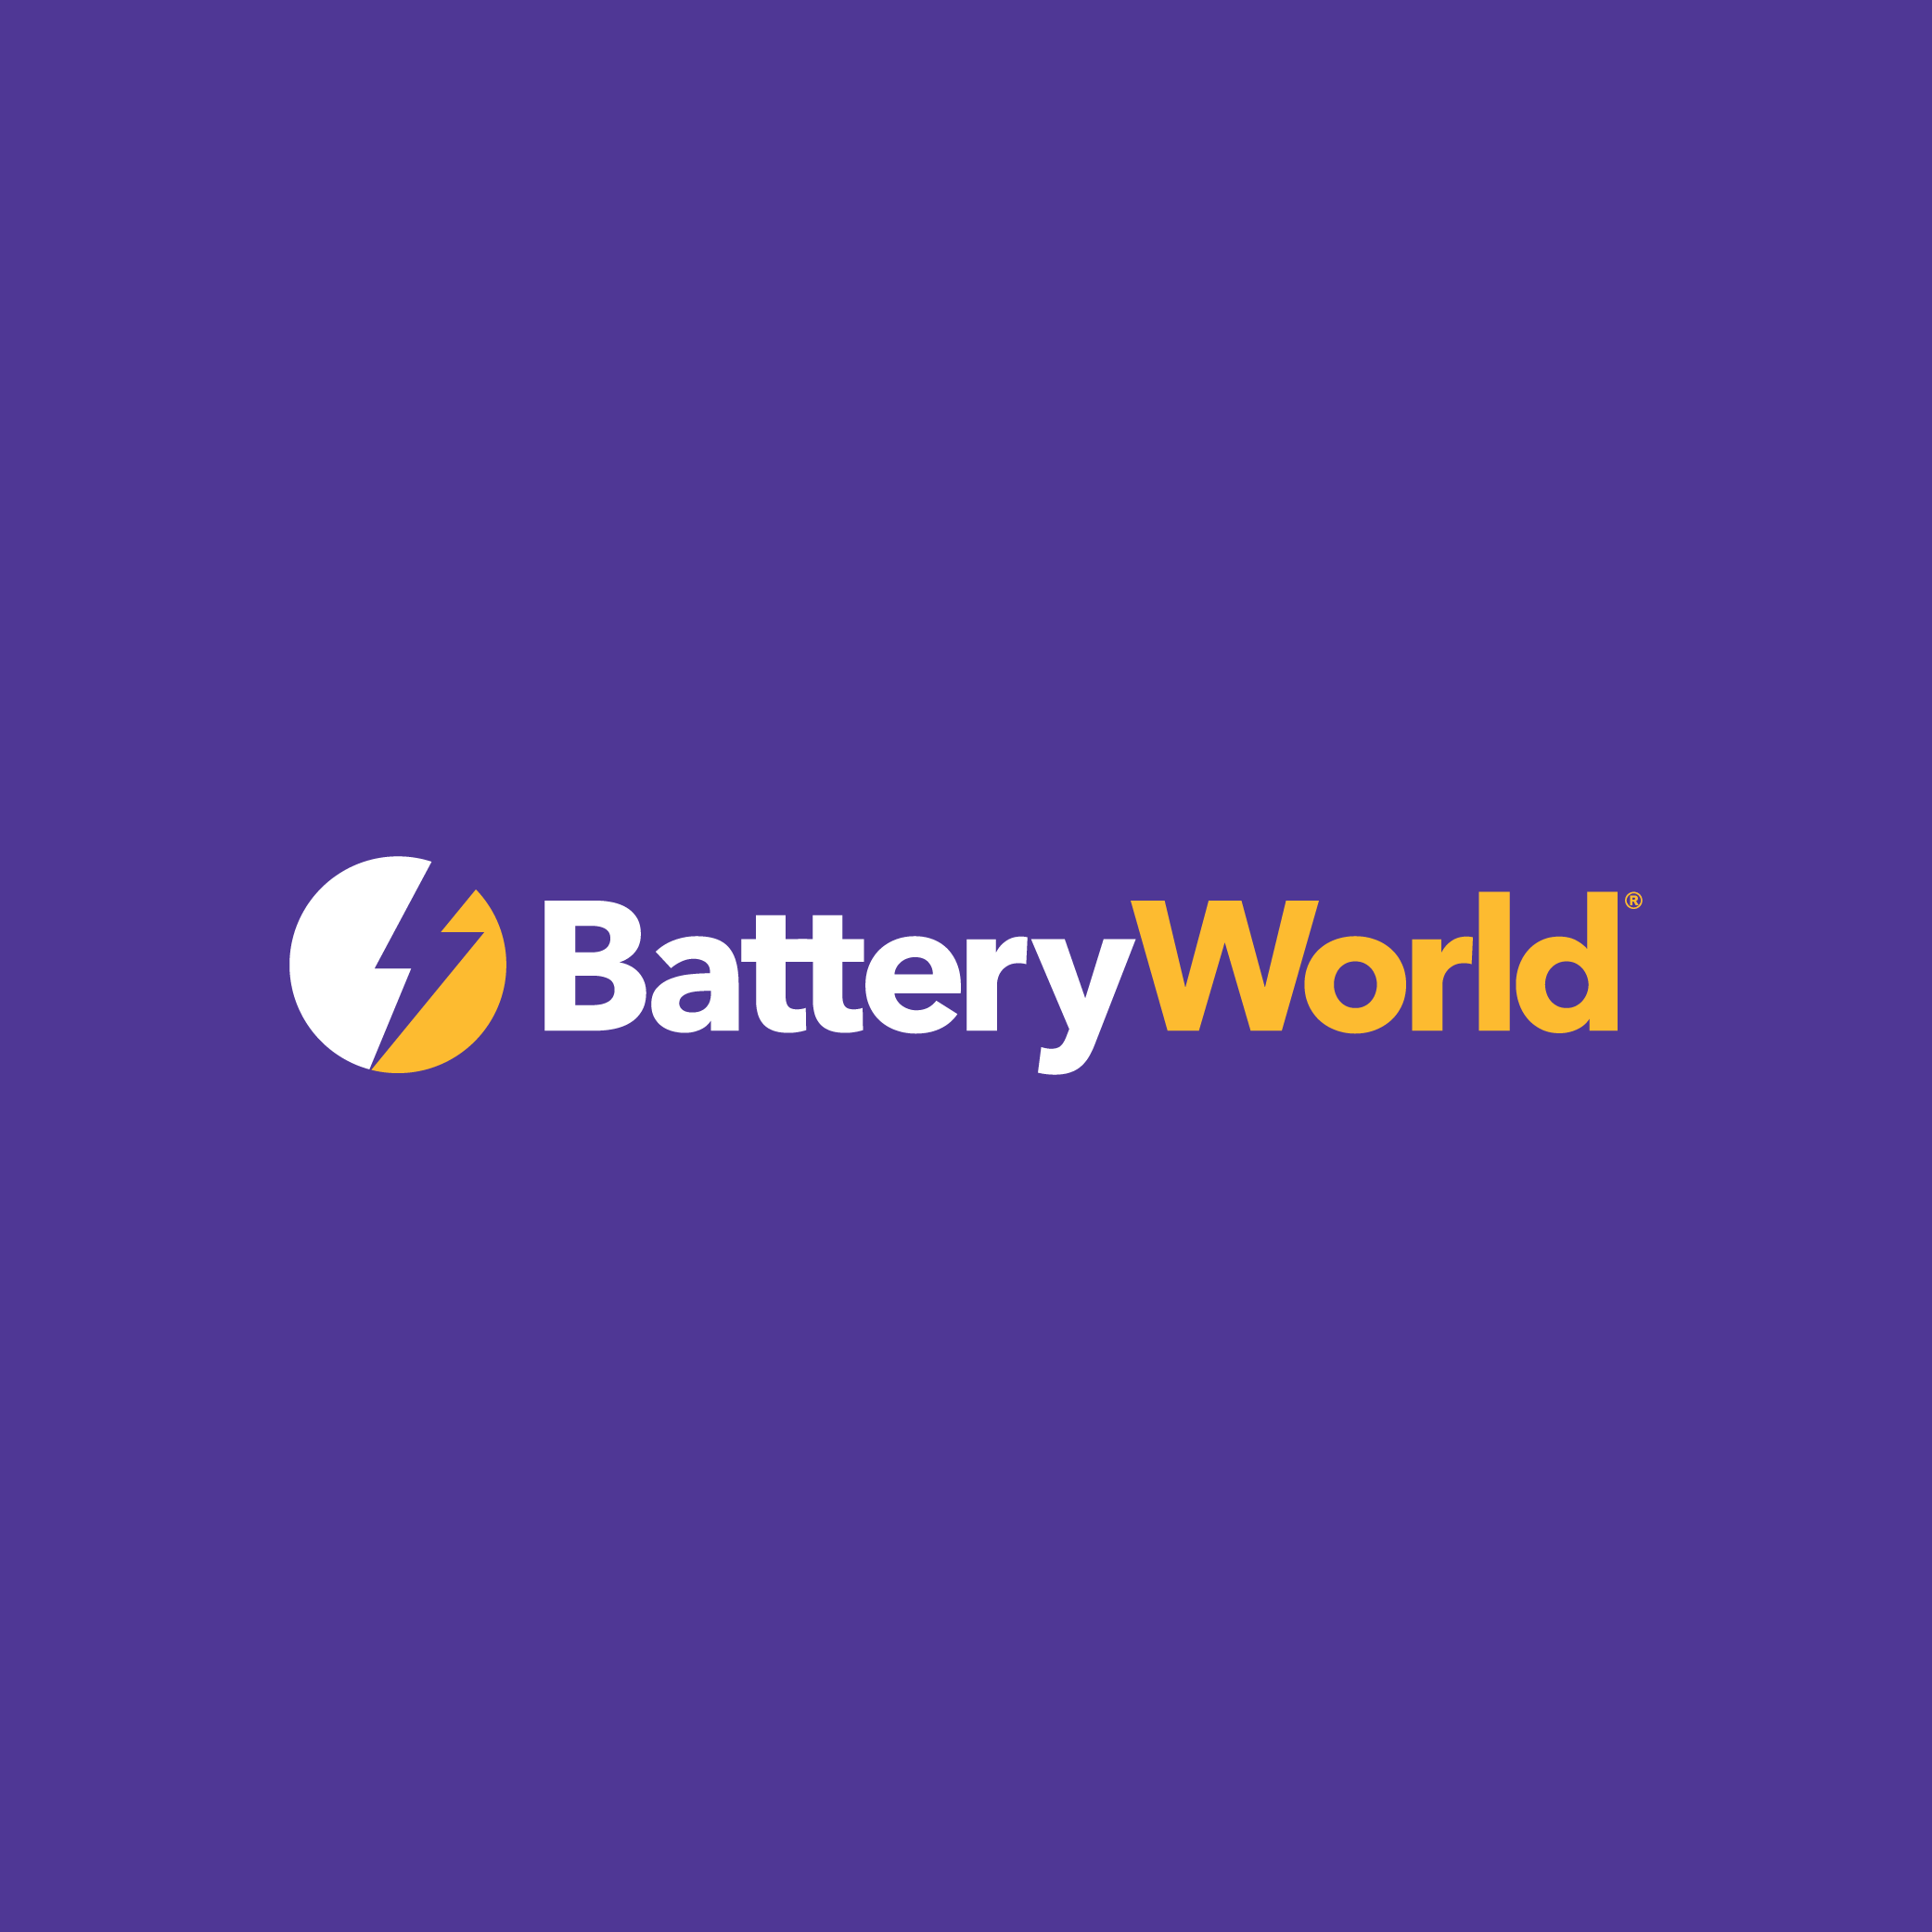 Battery World Bundaberg Bundaberg Central (07) 4153 5186